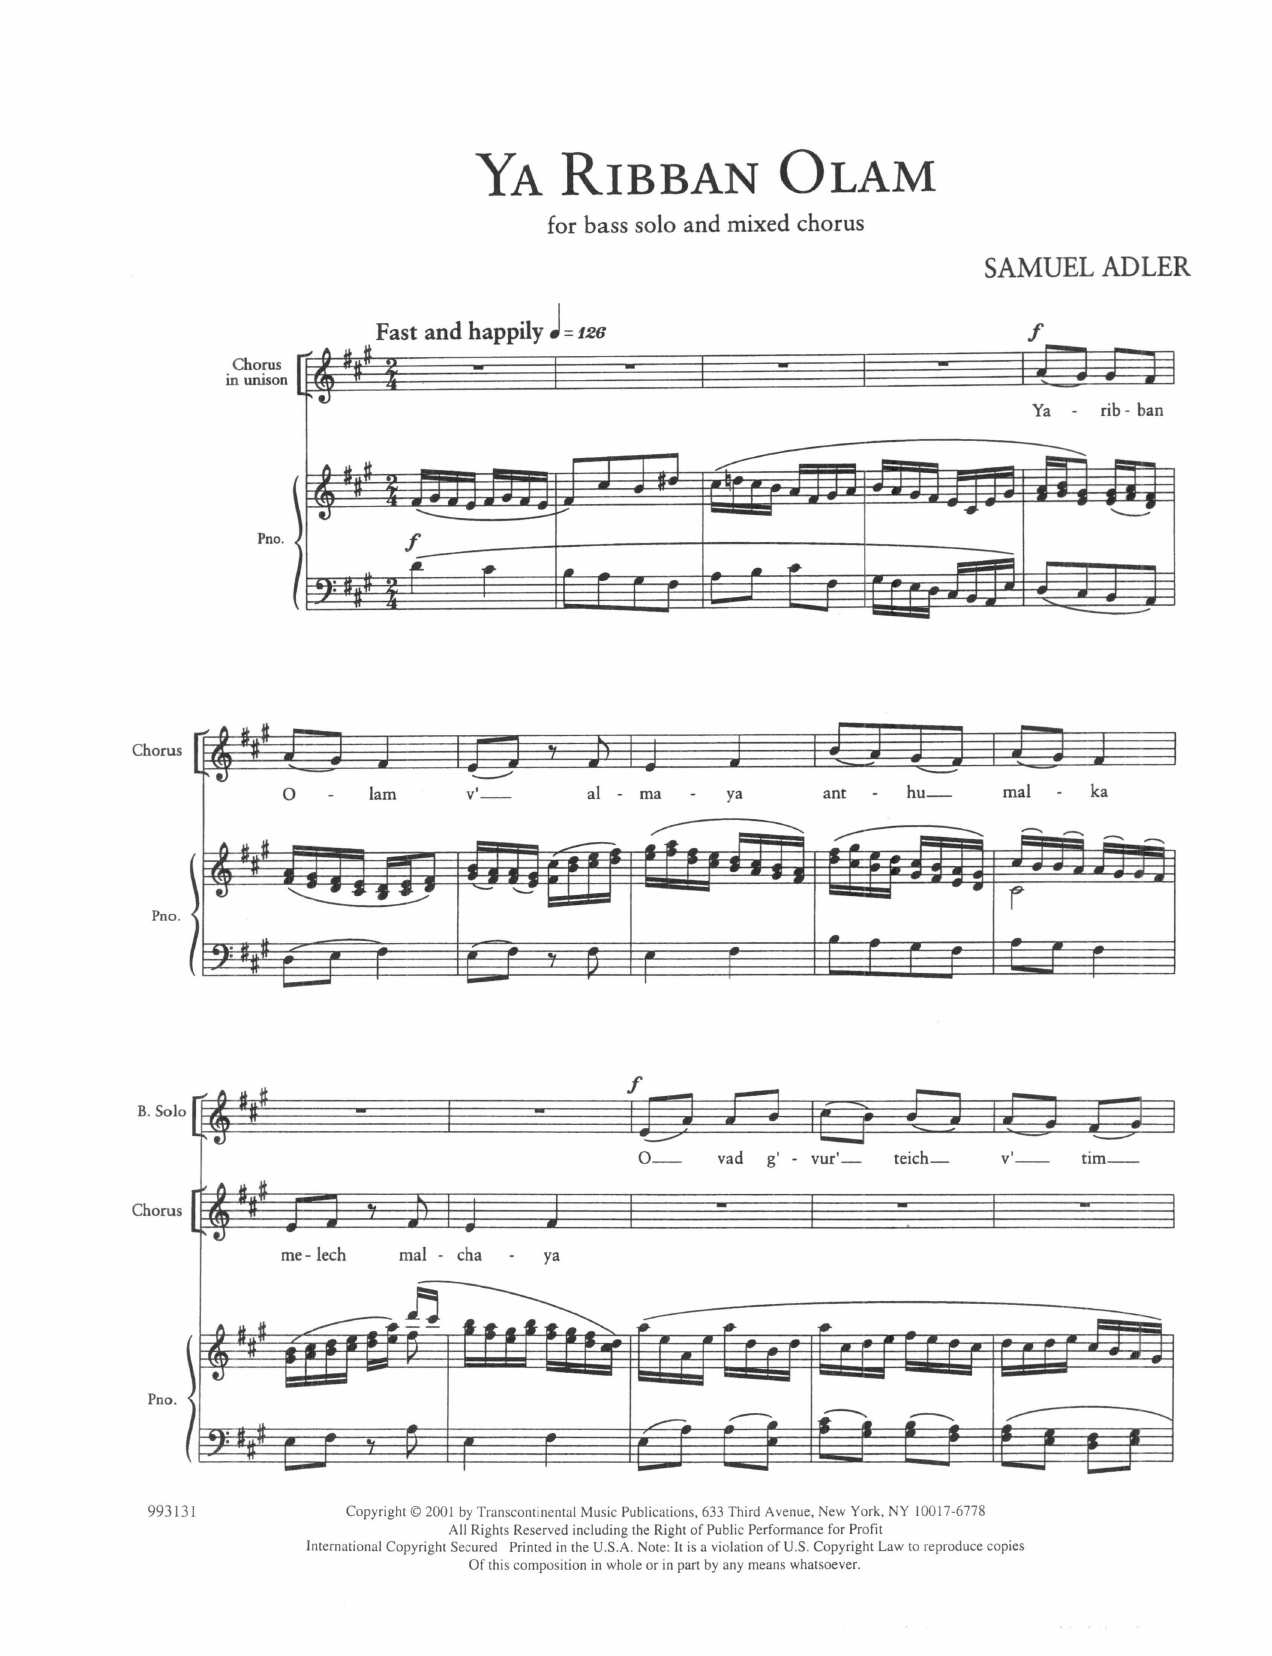 Samuel Adler Five Sephardic Choruses: Ya Ribban Olam Sheet Music Notes & Chords for SATB - Download or Print PDF